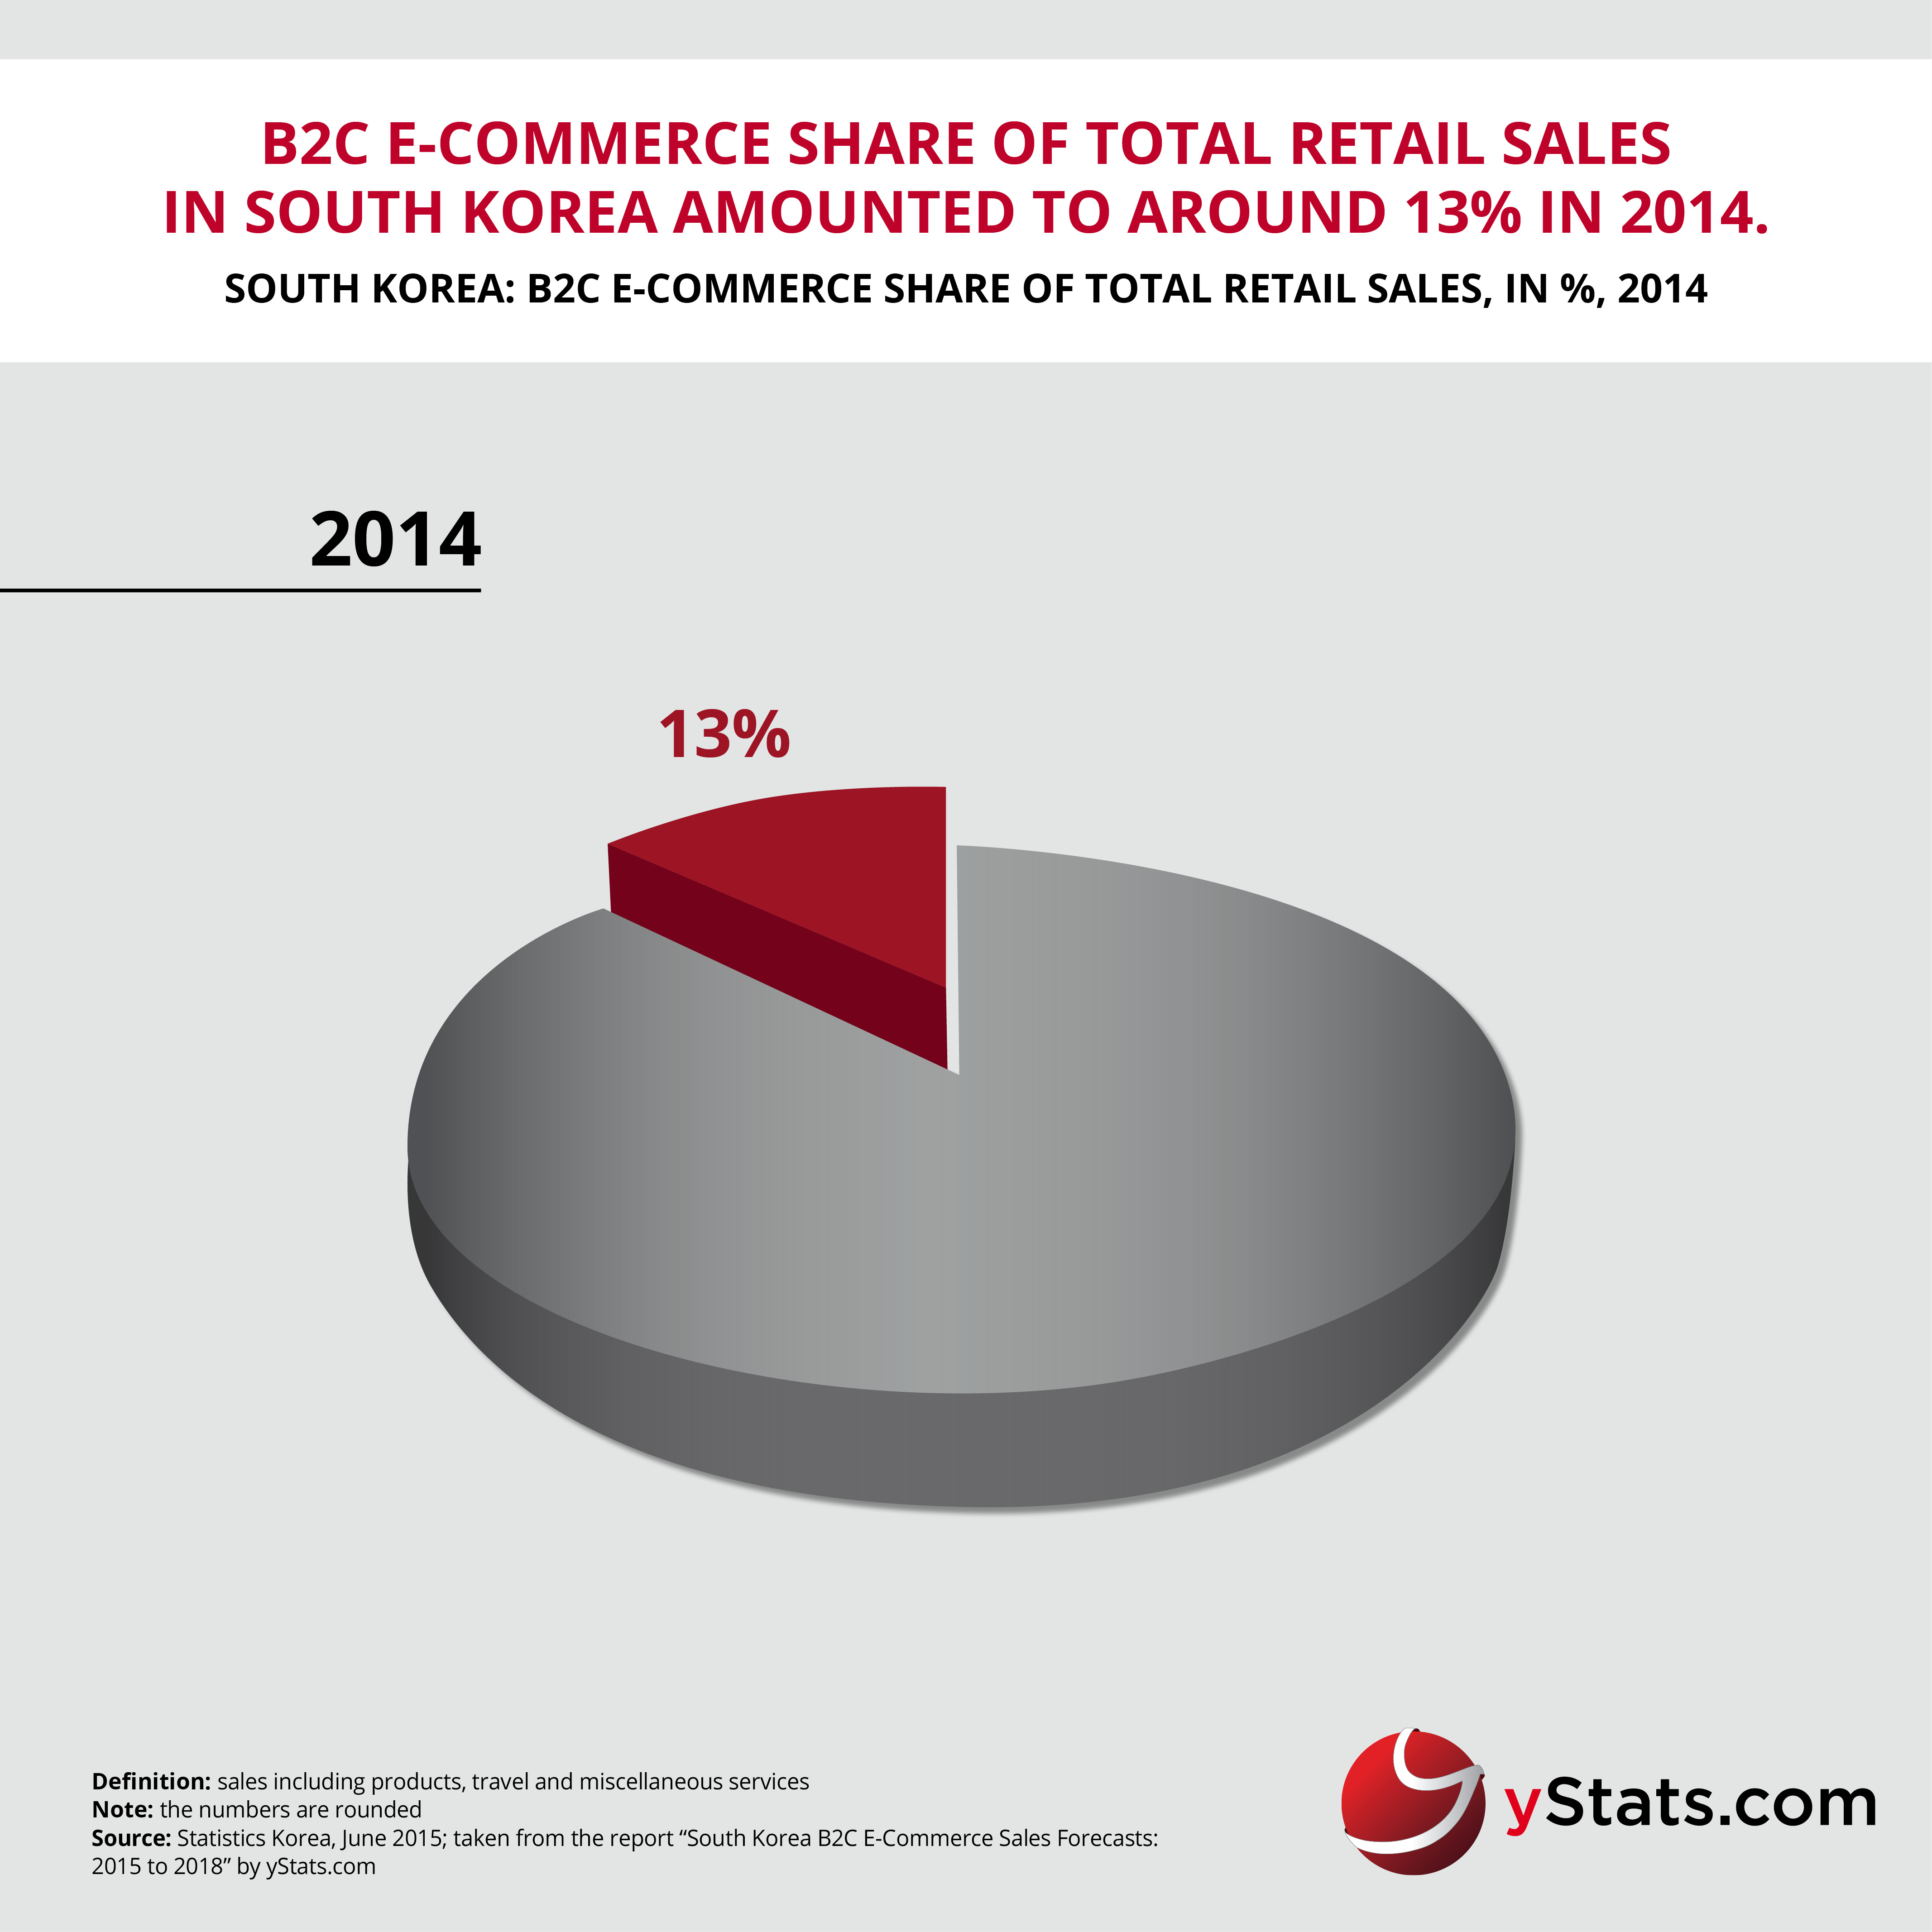 yStats.com Infographic South Korea B2C E-Commerce Sales Forecasts 2015 to 2018